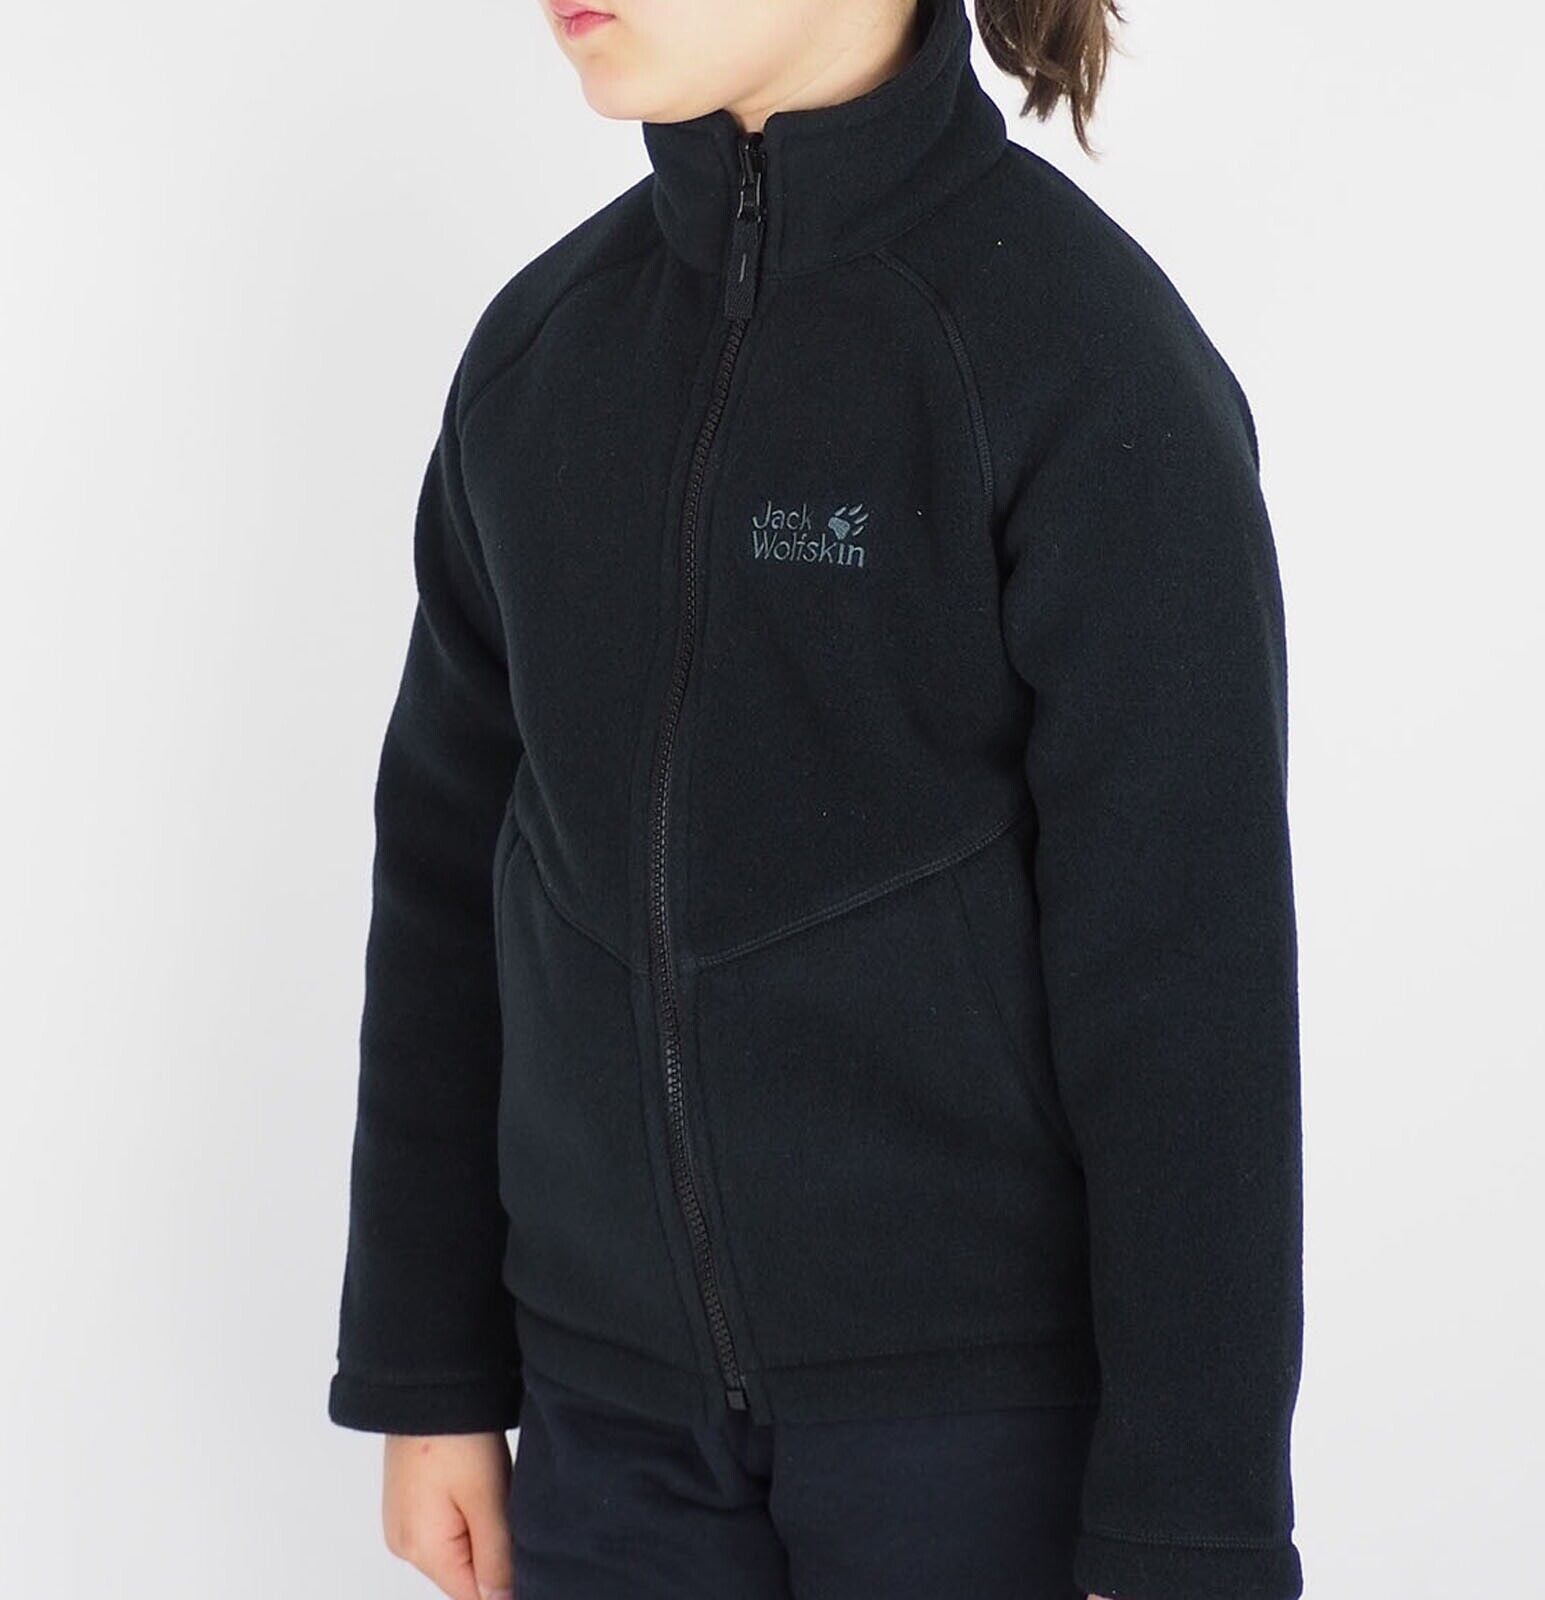 Kids Unisex Jack Wolfskin Hudson Bay 1604251 Black Fleece Quick Drying Jacket - London Top Style